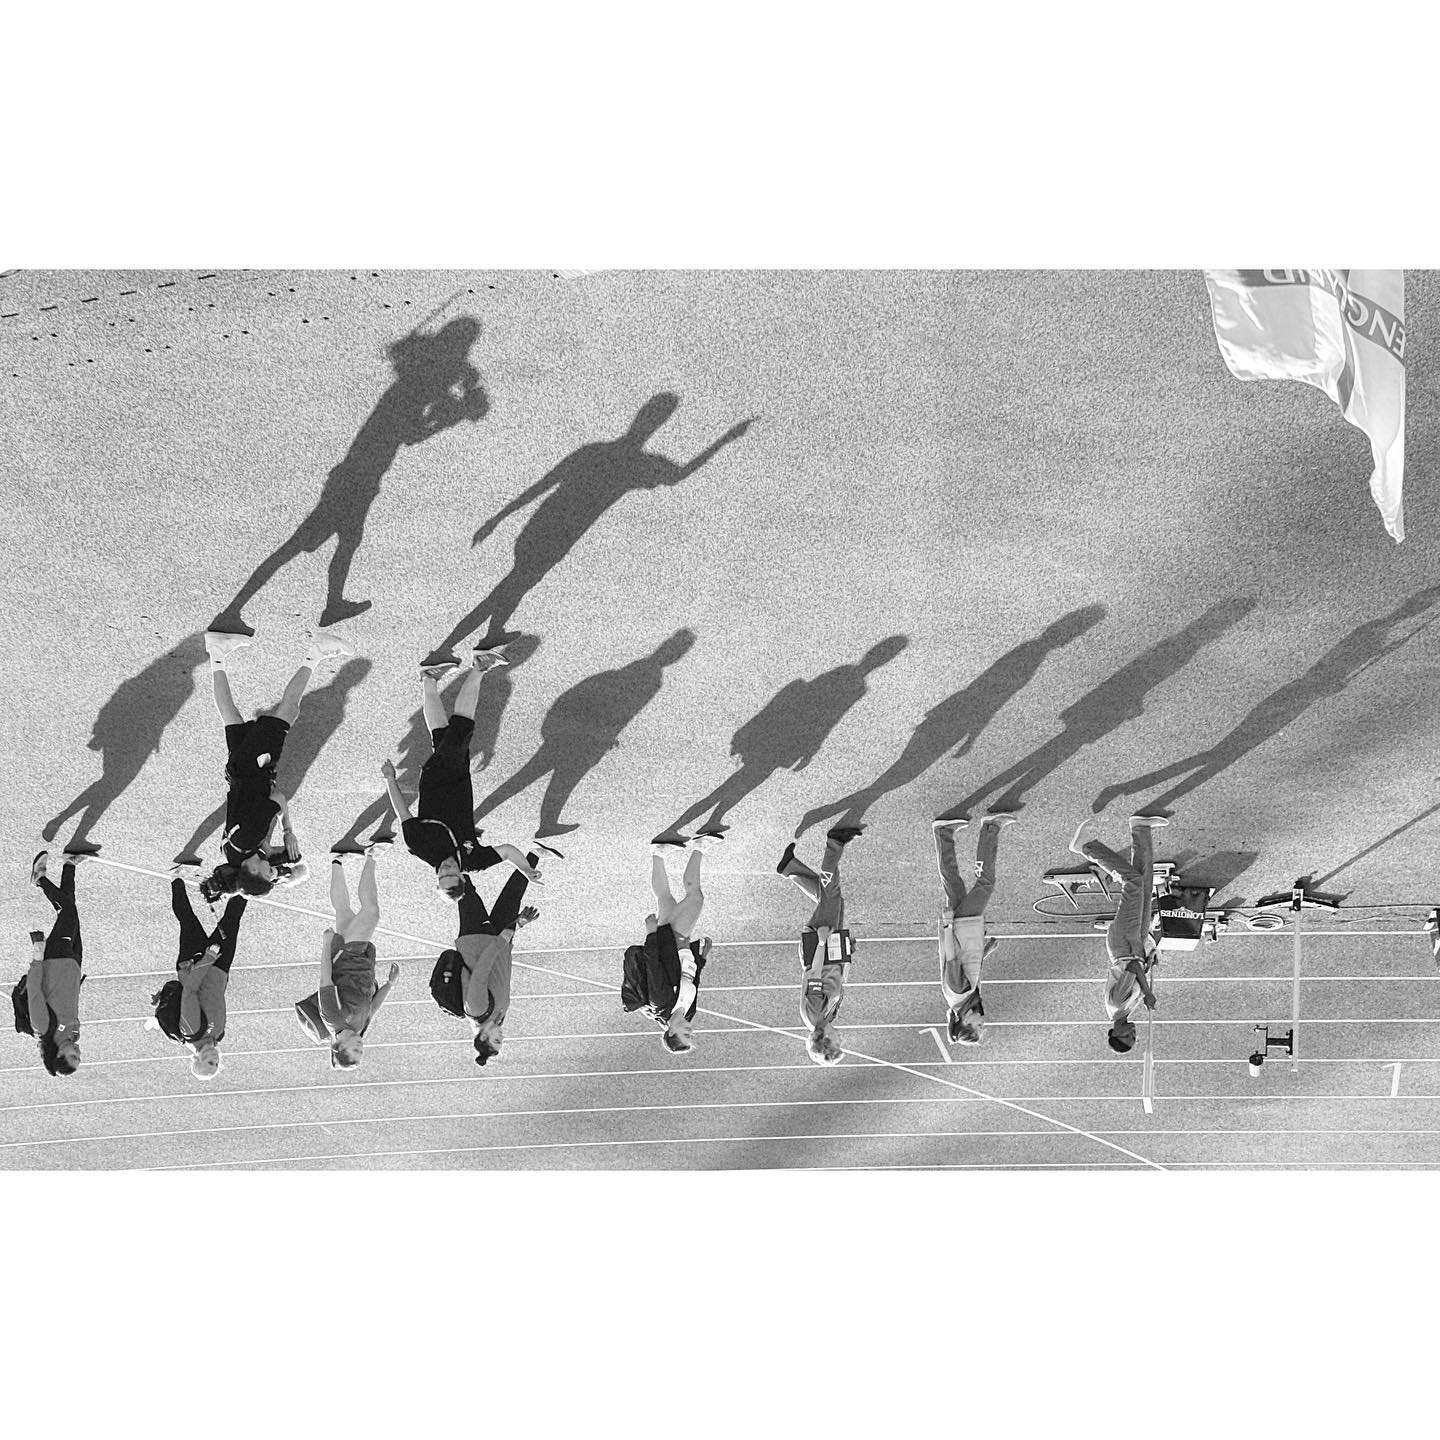 Shadow play
Procession of the athletes for the hammer throw 
——
#bbcmidlands #igersbirminghamuk #bbcsport #shadow #bnw #blackandwhitephotography #b2022 #commonwealthgames2022 #bbc #athelete #procession #birminghamlive #birminghamlife #b2022 #commonwealthgames #everything_imaginable #ukpotd #bhamcitycouncil #appicoftheweek